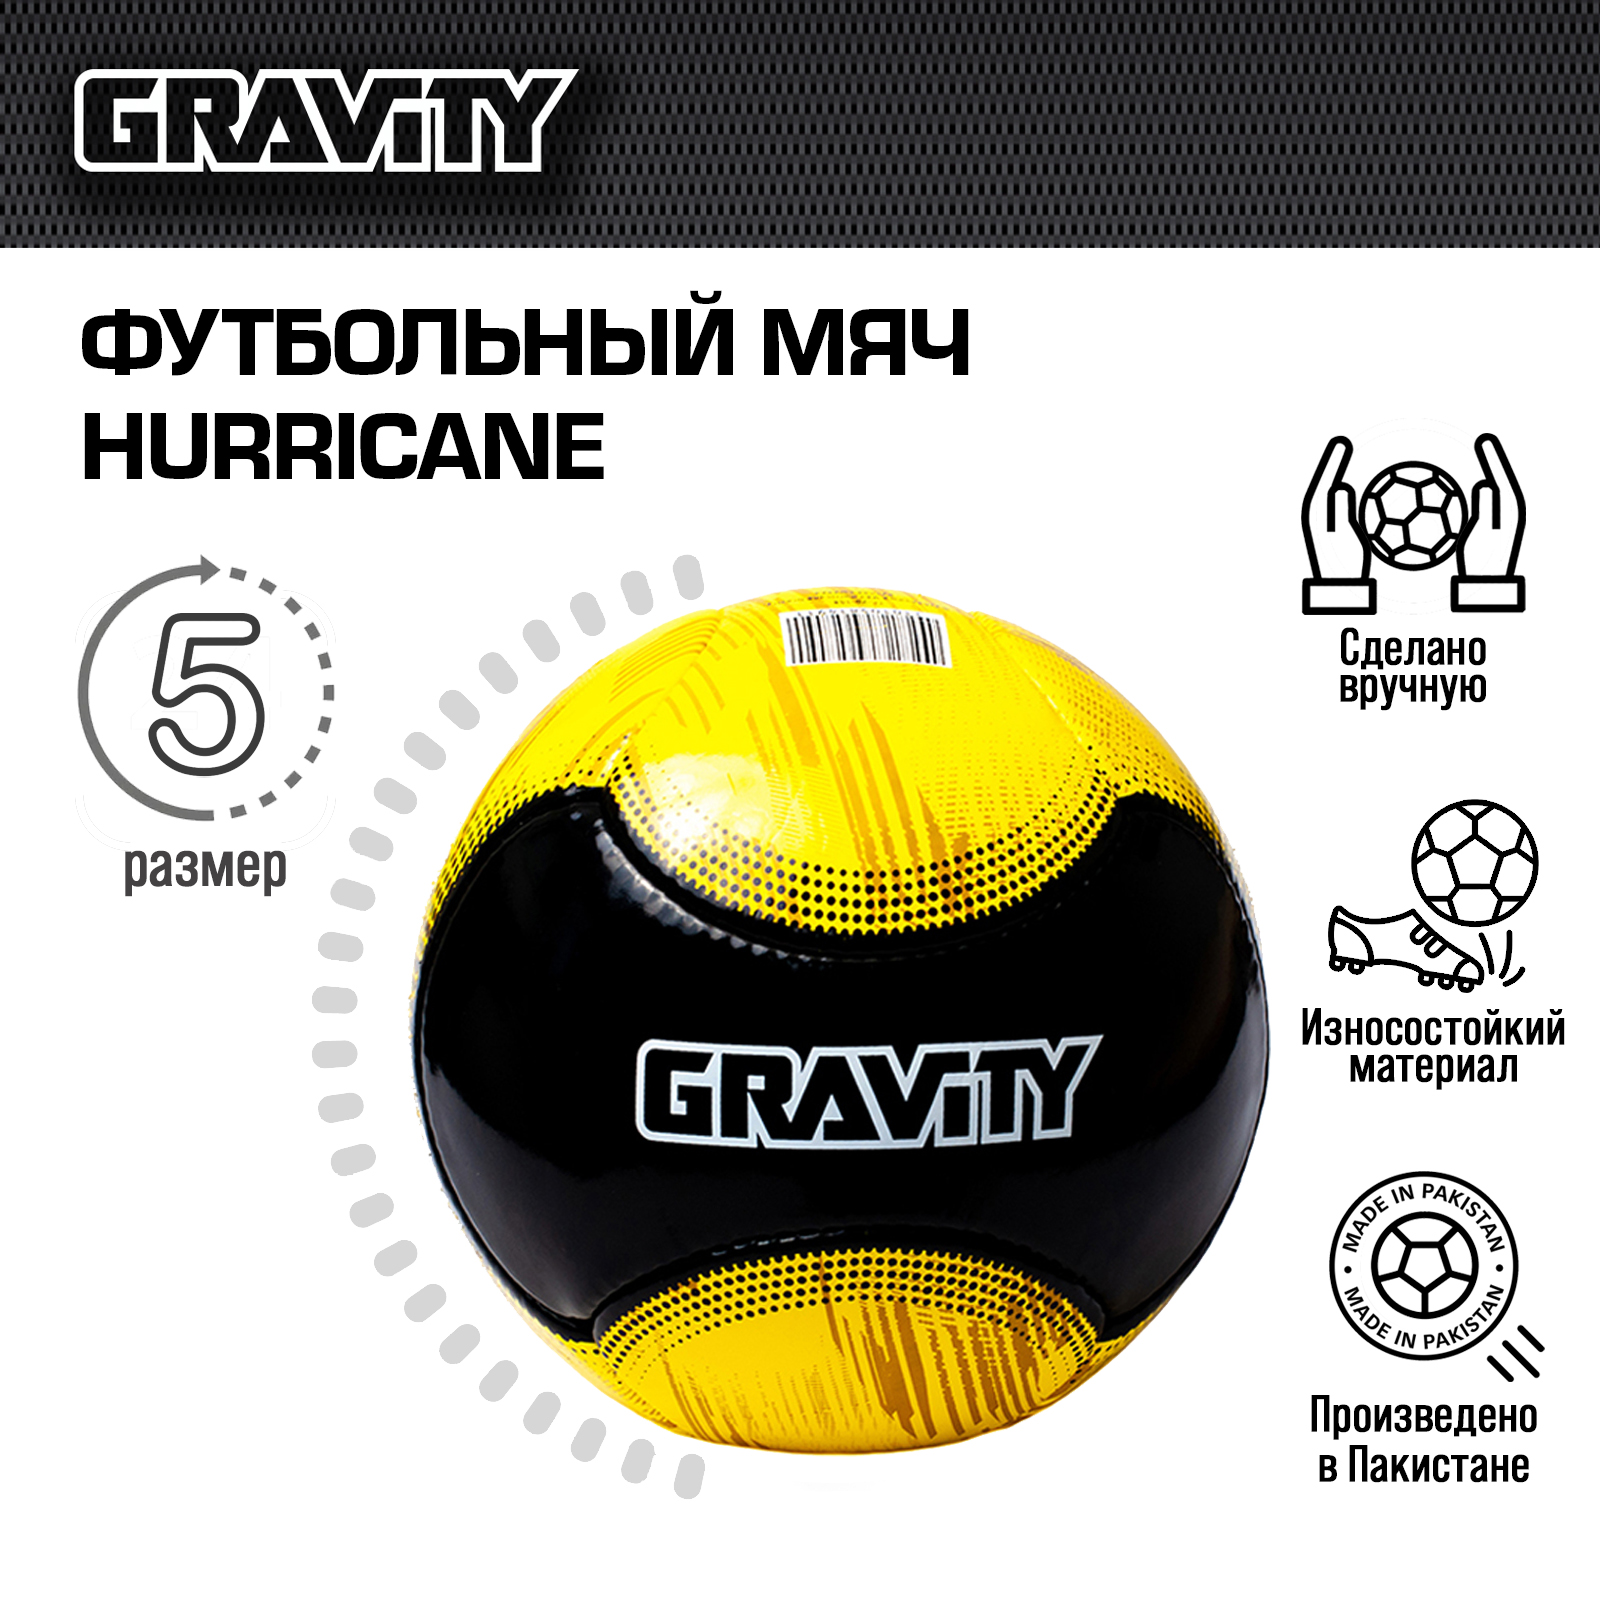 Футбольный мяч Gravity, ручная сшивка, HURRICANE